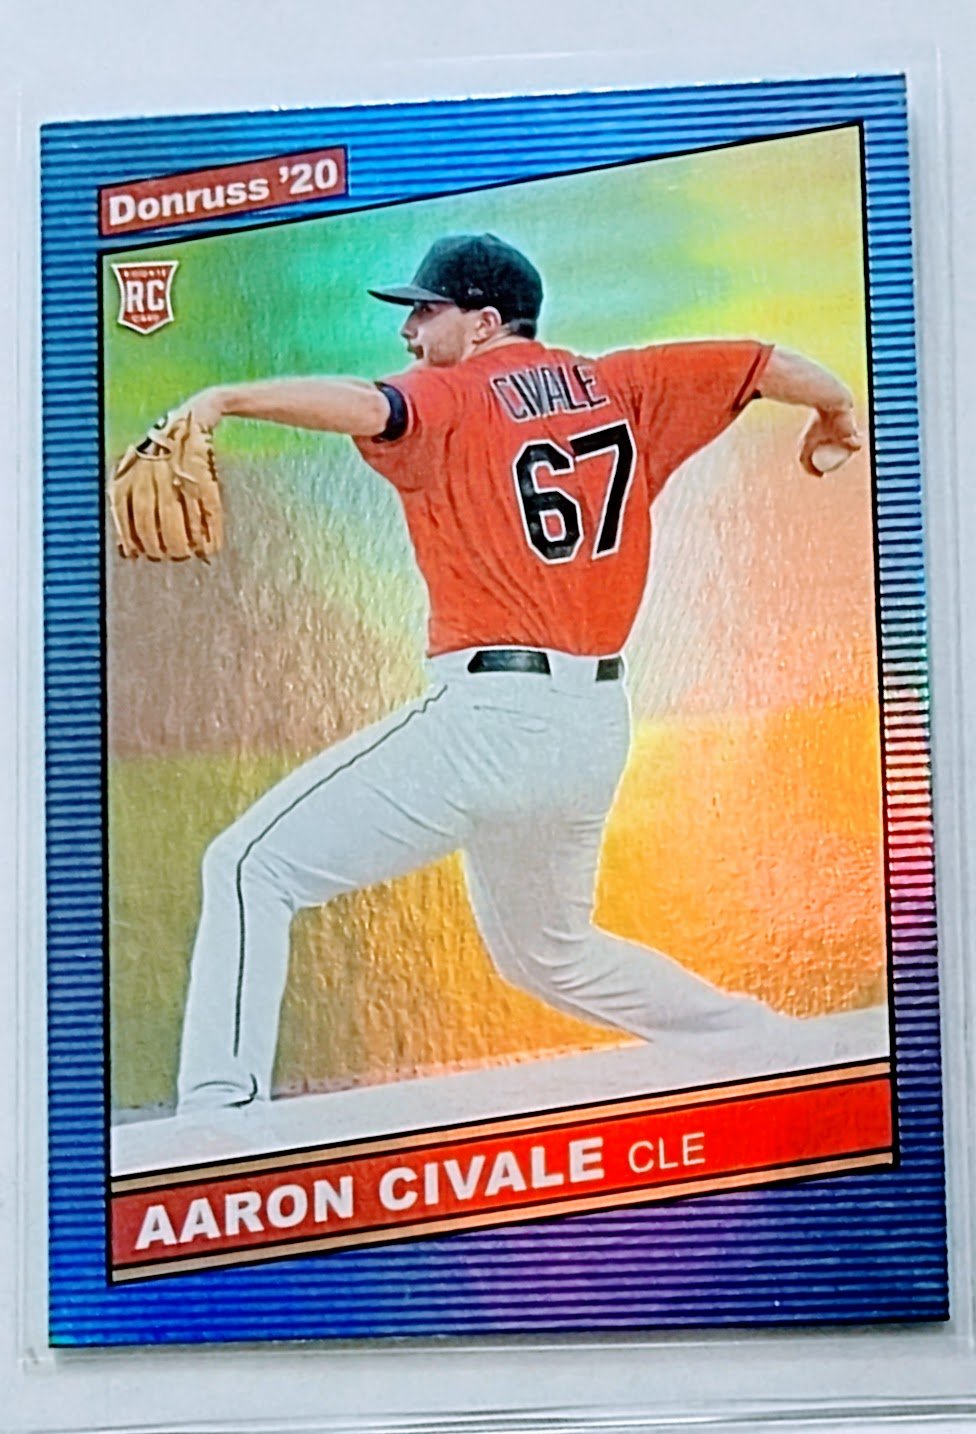 2019 Donruss Aaron Civale Rookie Refractor Baseball Card TPTV simple Xclusive Collectibles   